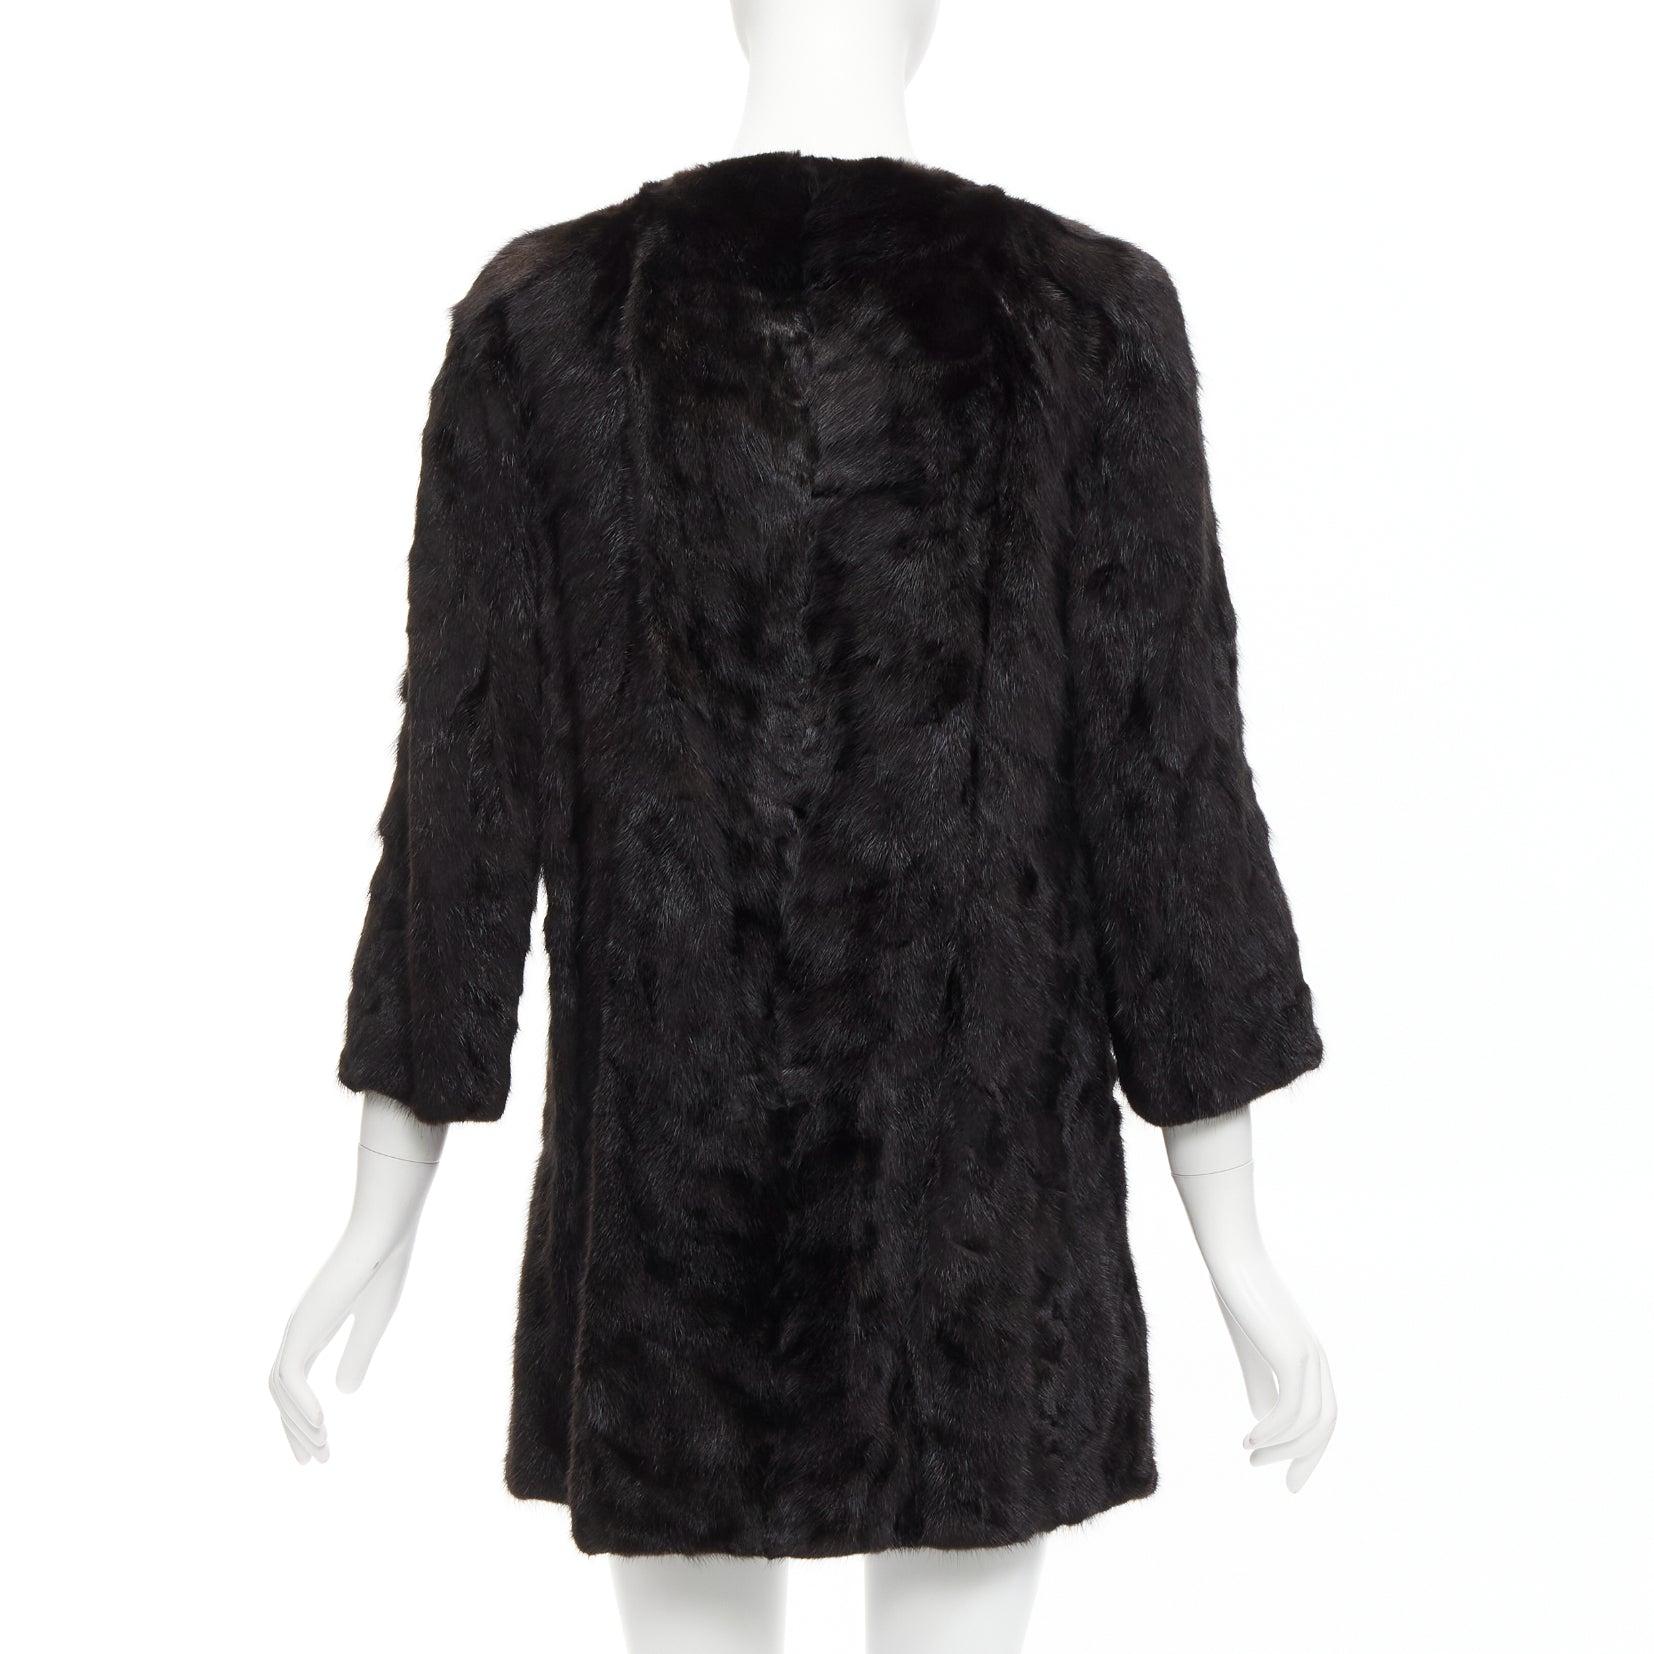 CHEVITTE dark brown genuine fur jewel neck cropped sleeves coat top M For Sale 2